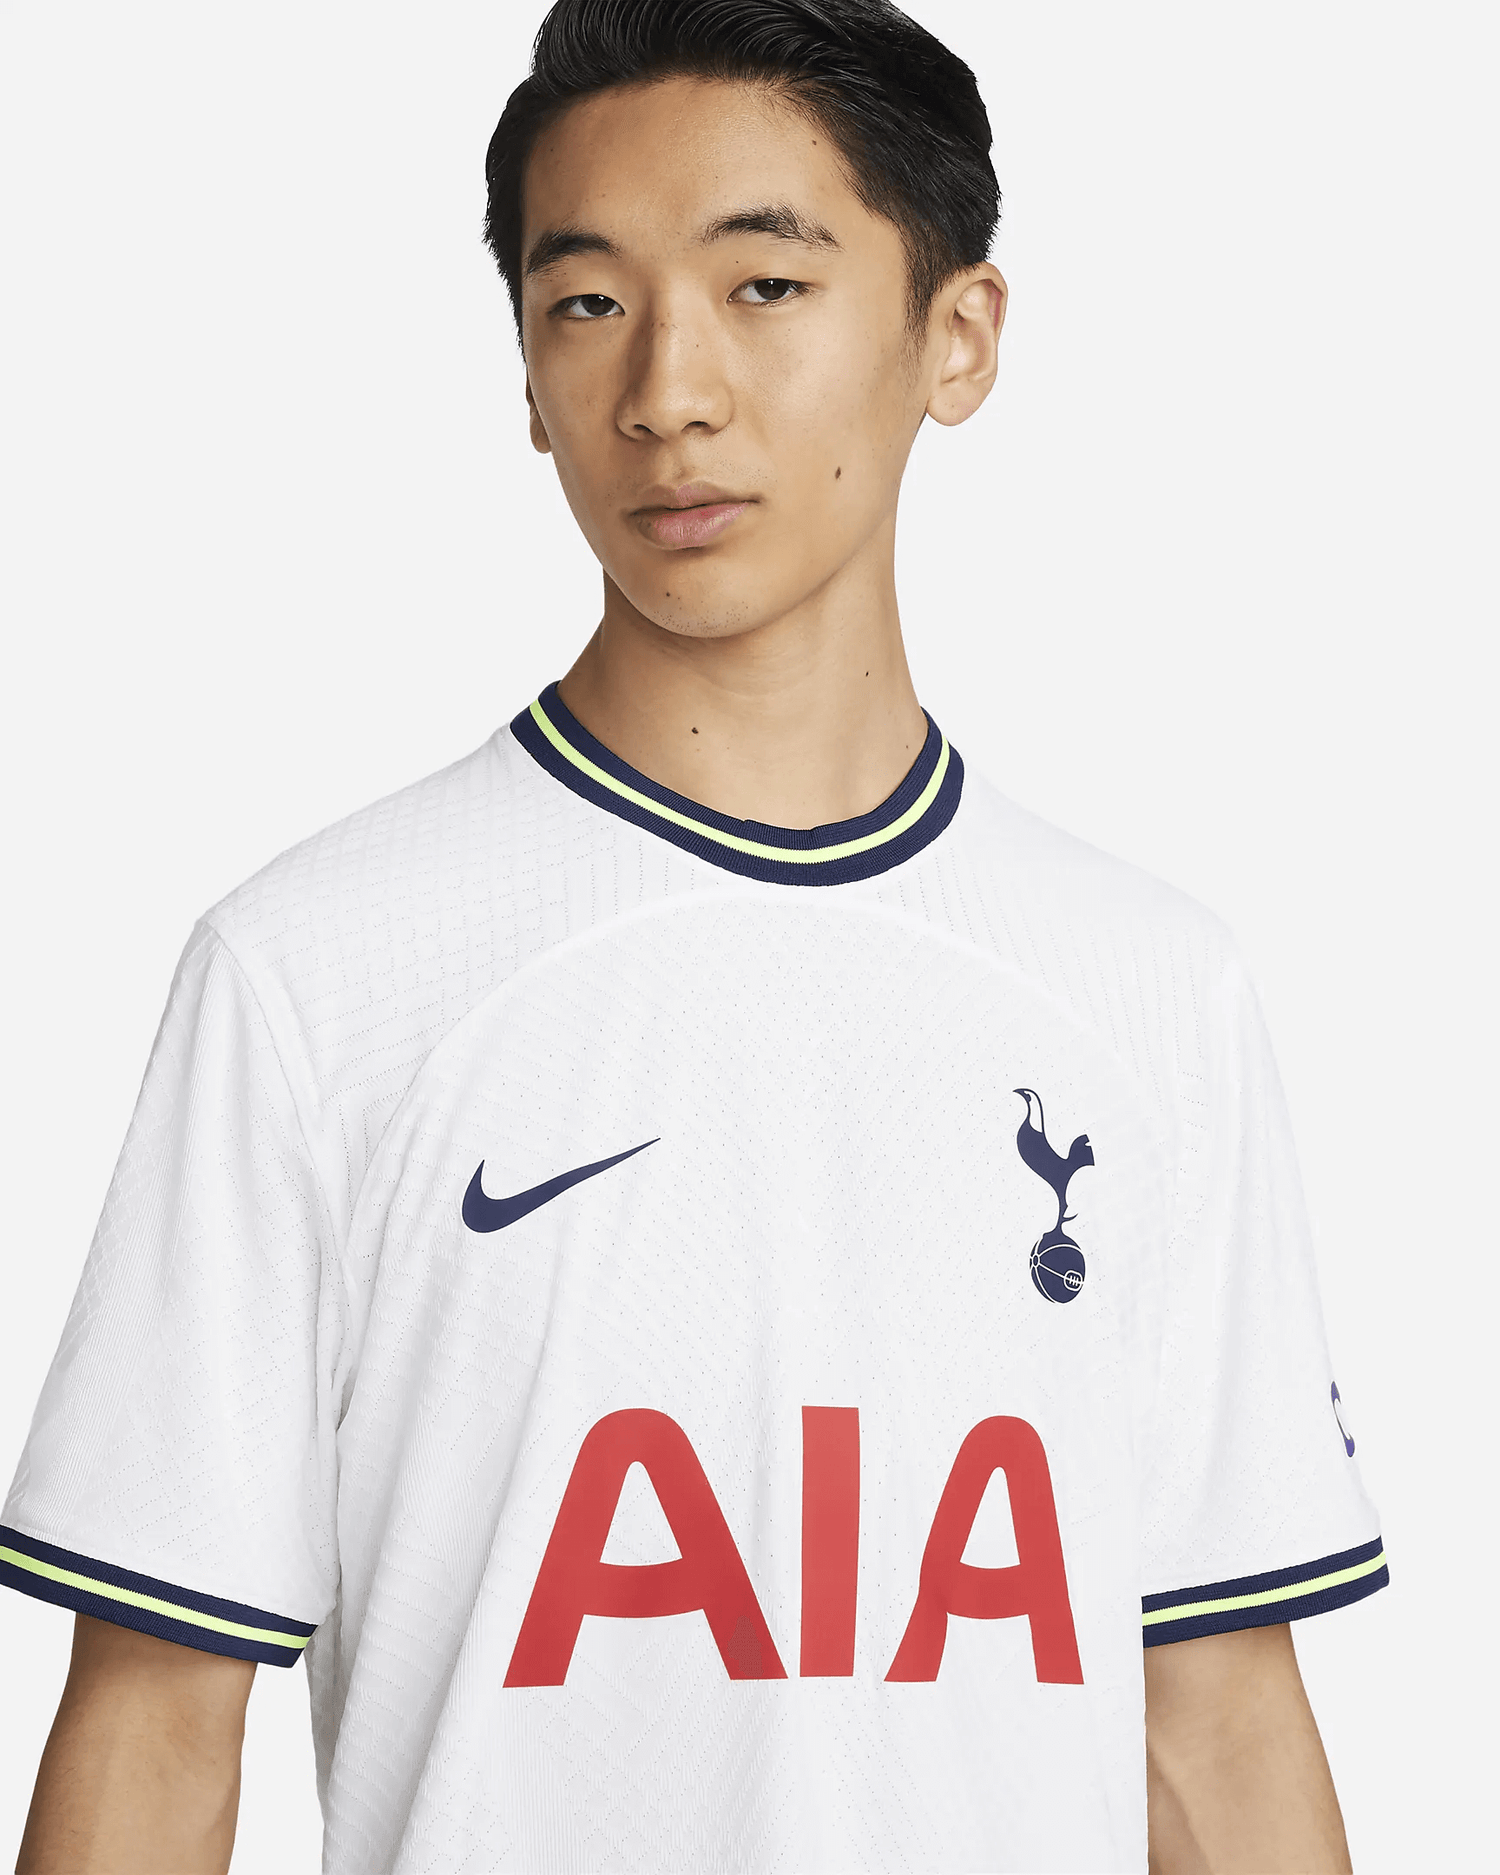 Men's Authentic Nike Tottenham Hotspur Third Jersey 22/23 - Size M